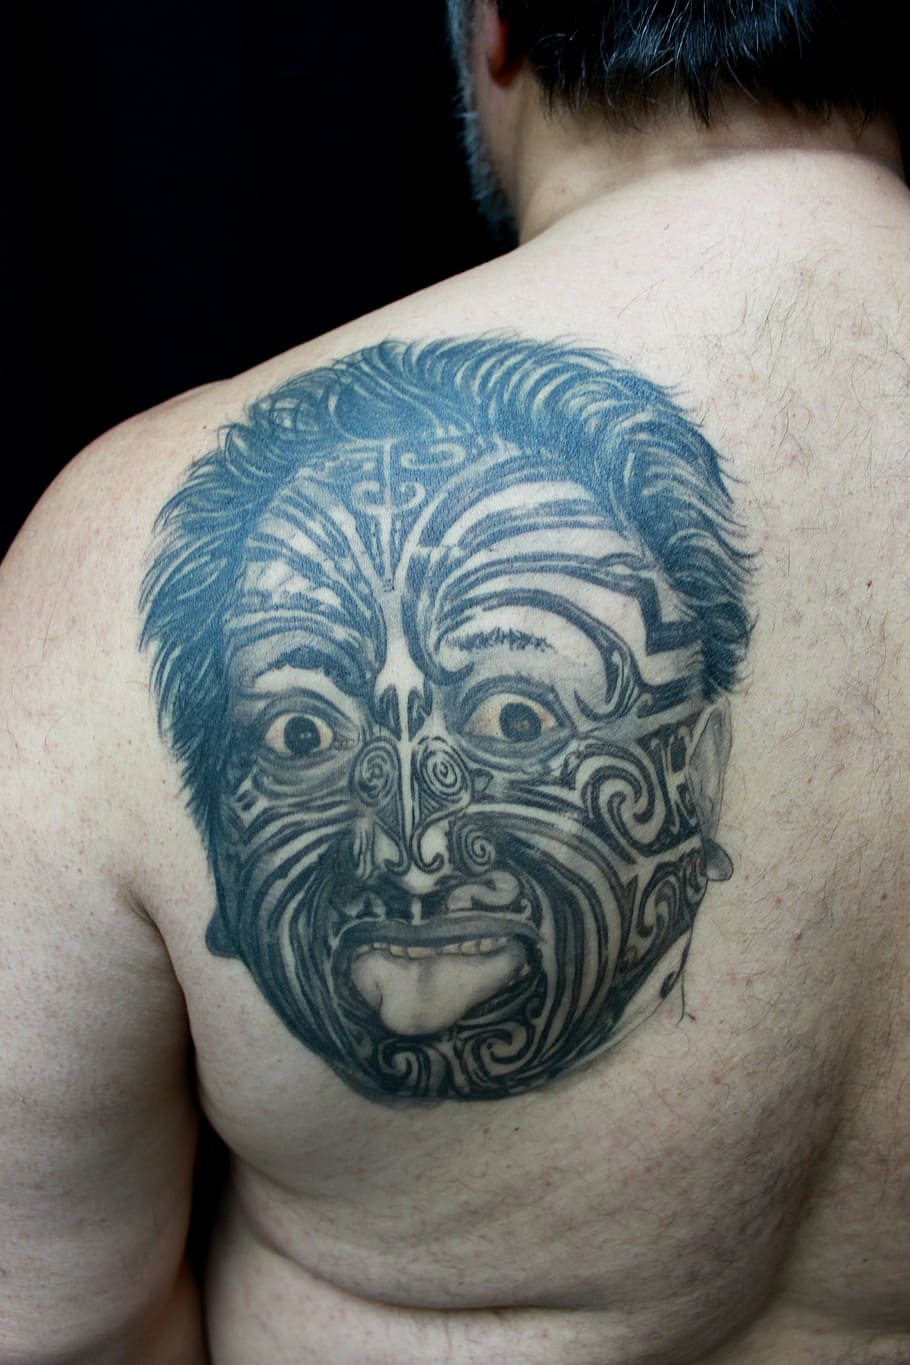 Maori tattoo design back by MaoriTattoo on DeviantArt